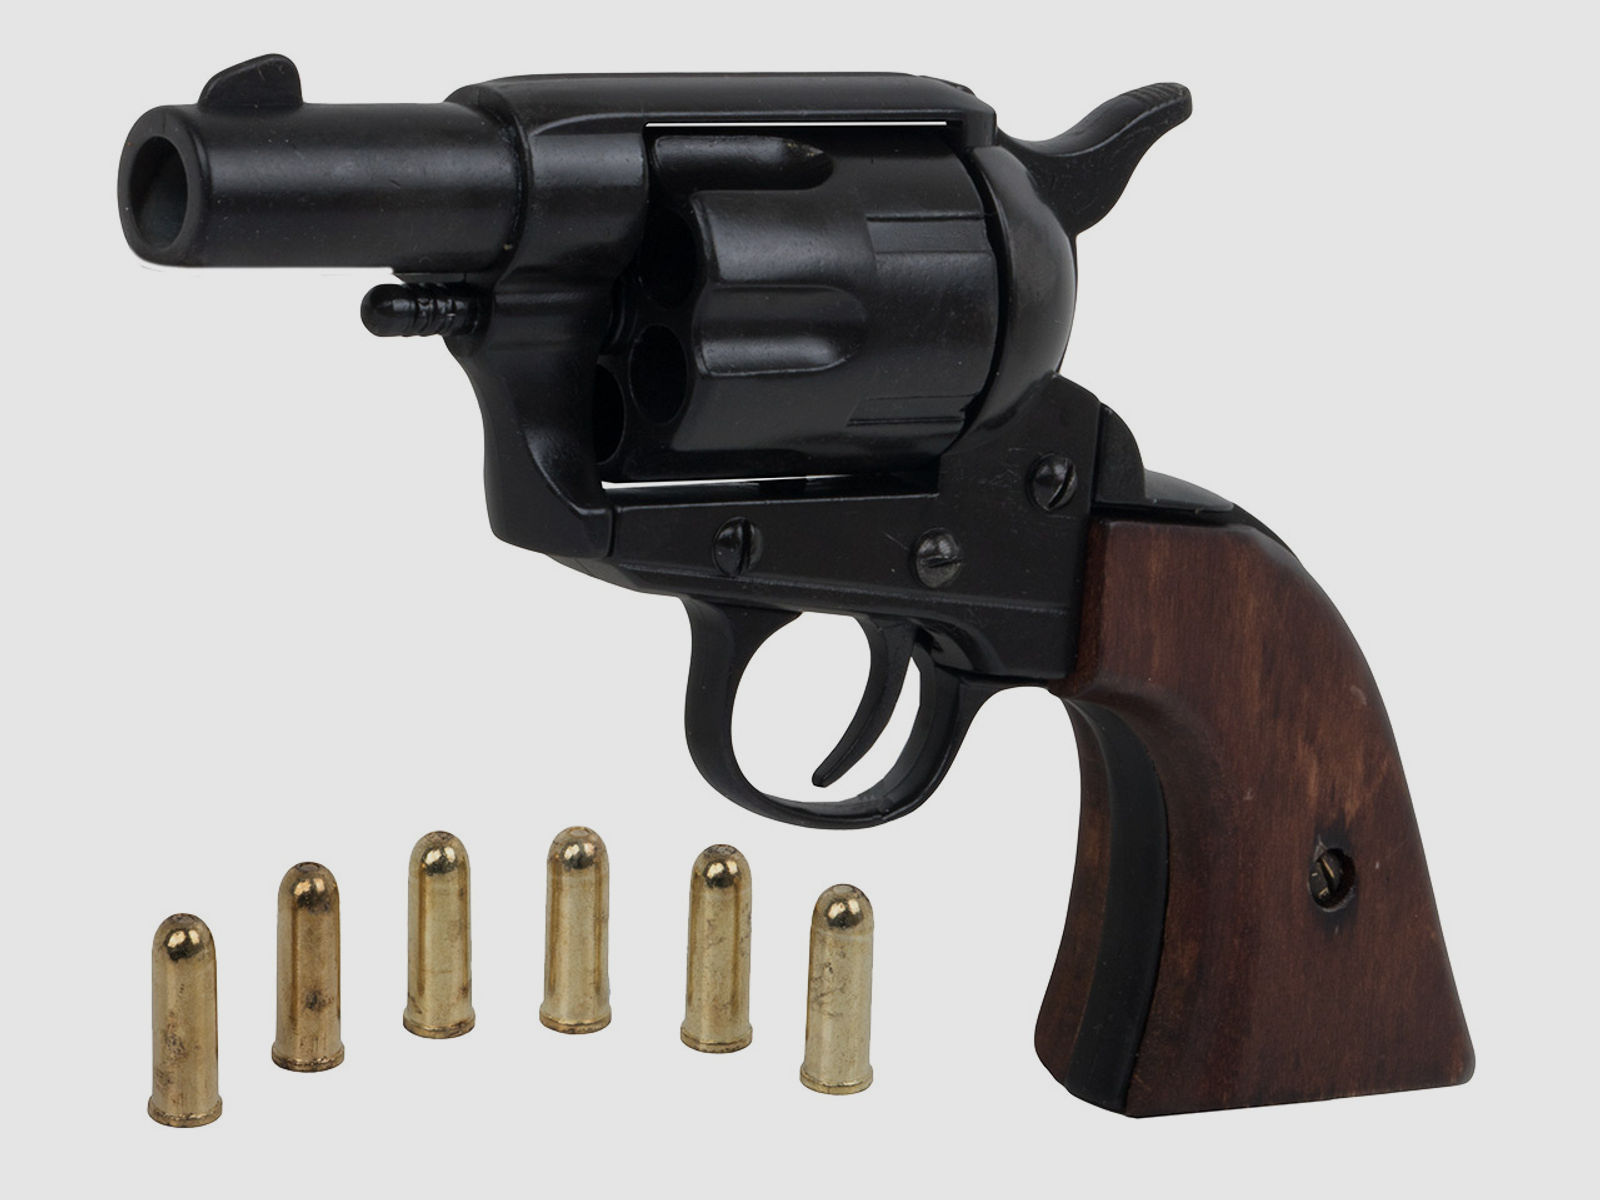 Deko Revolver Kolser Colt SAA Single Action Army Snub Nose 2,5 Zoll schwarz Holzgriffschalen